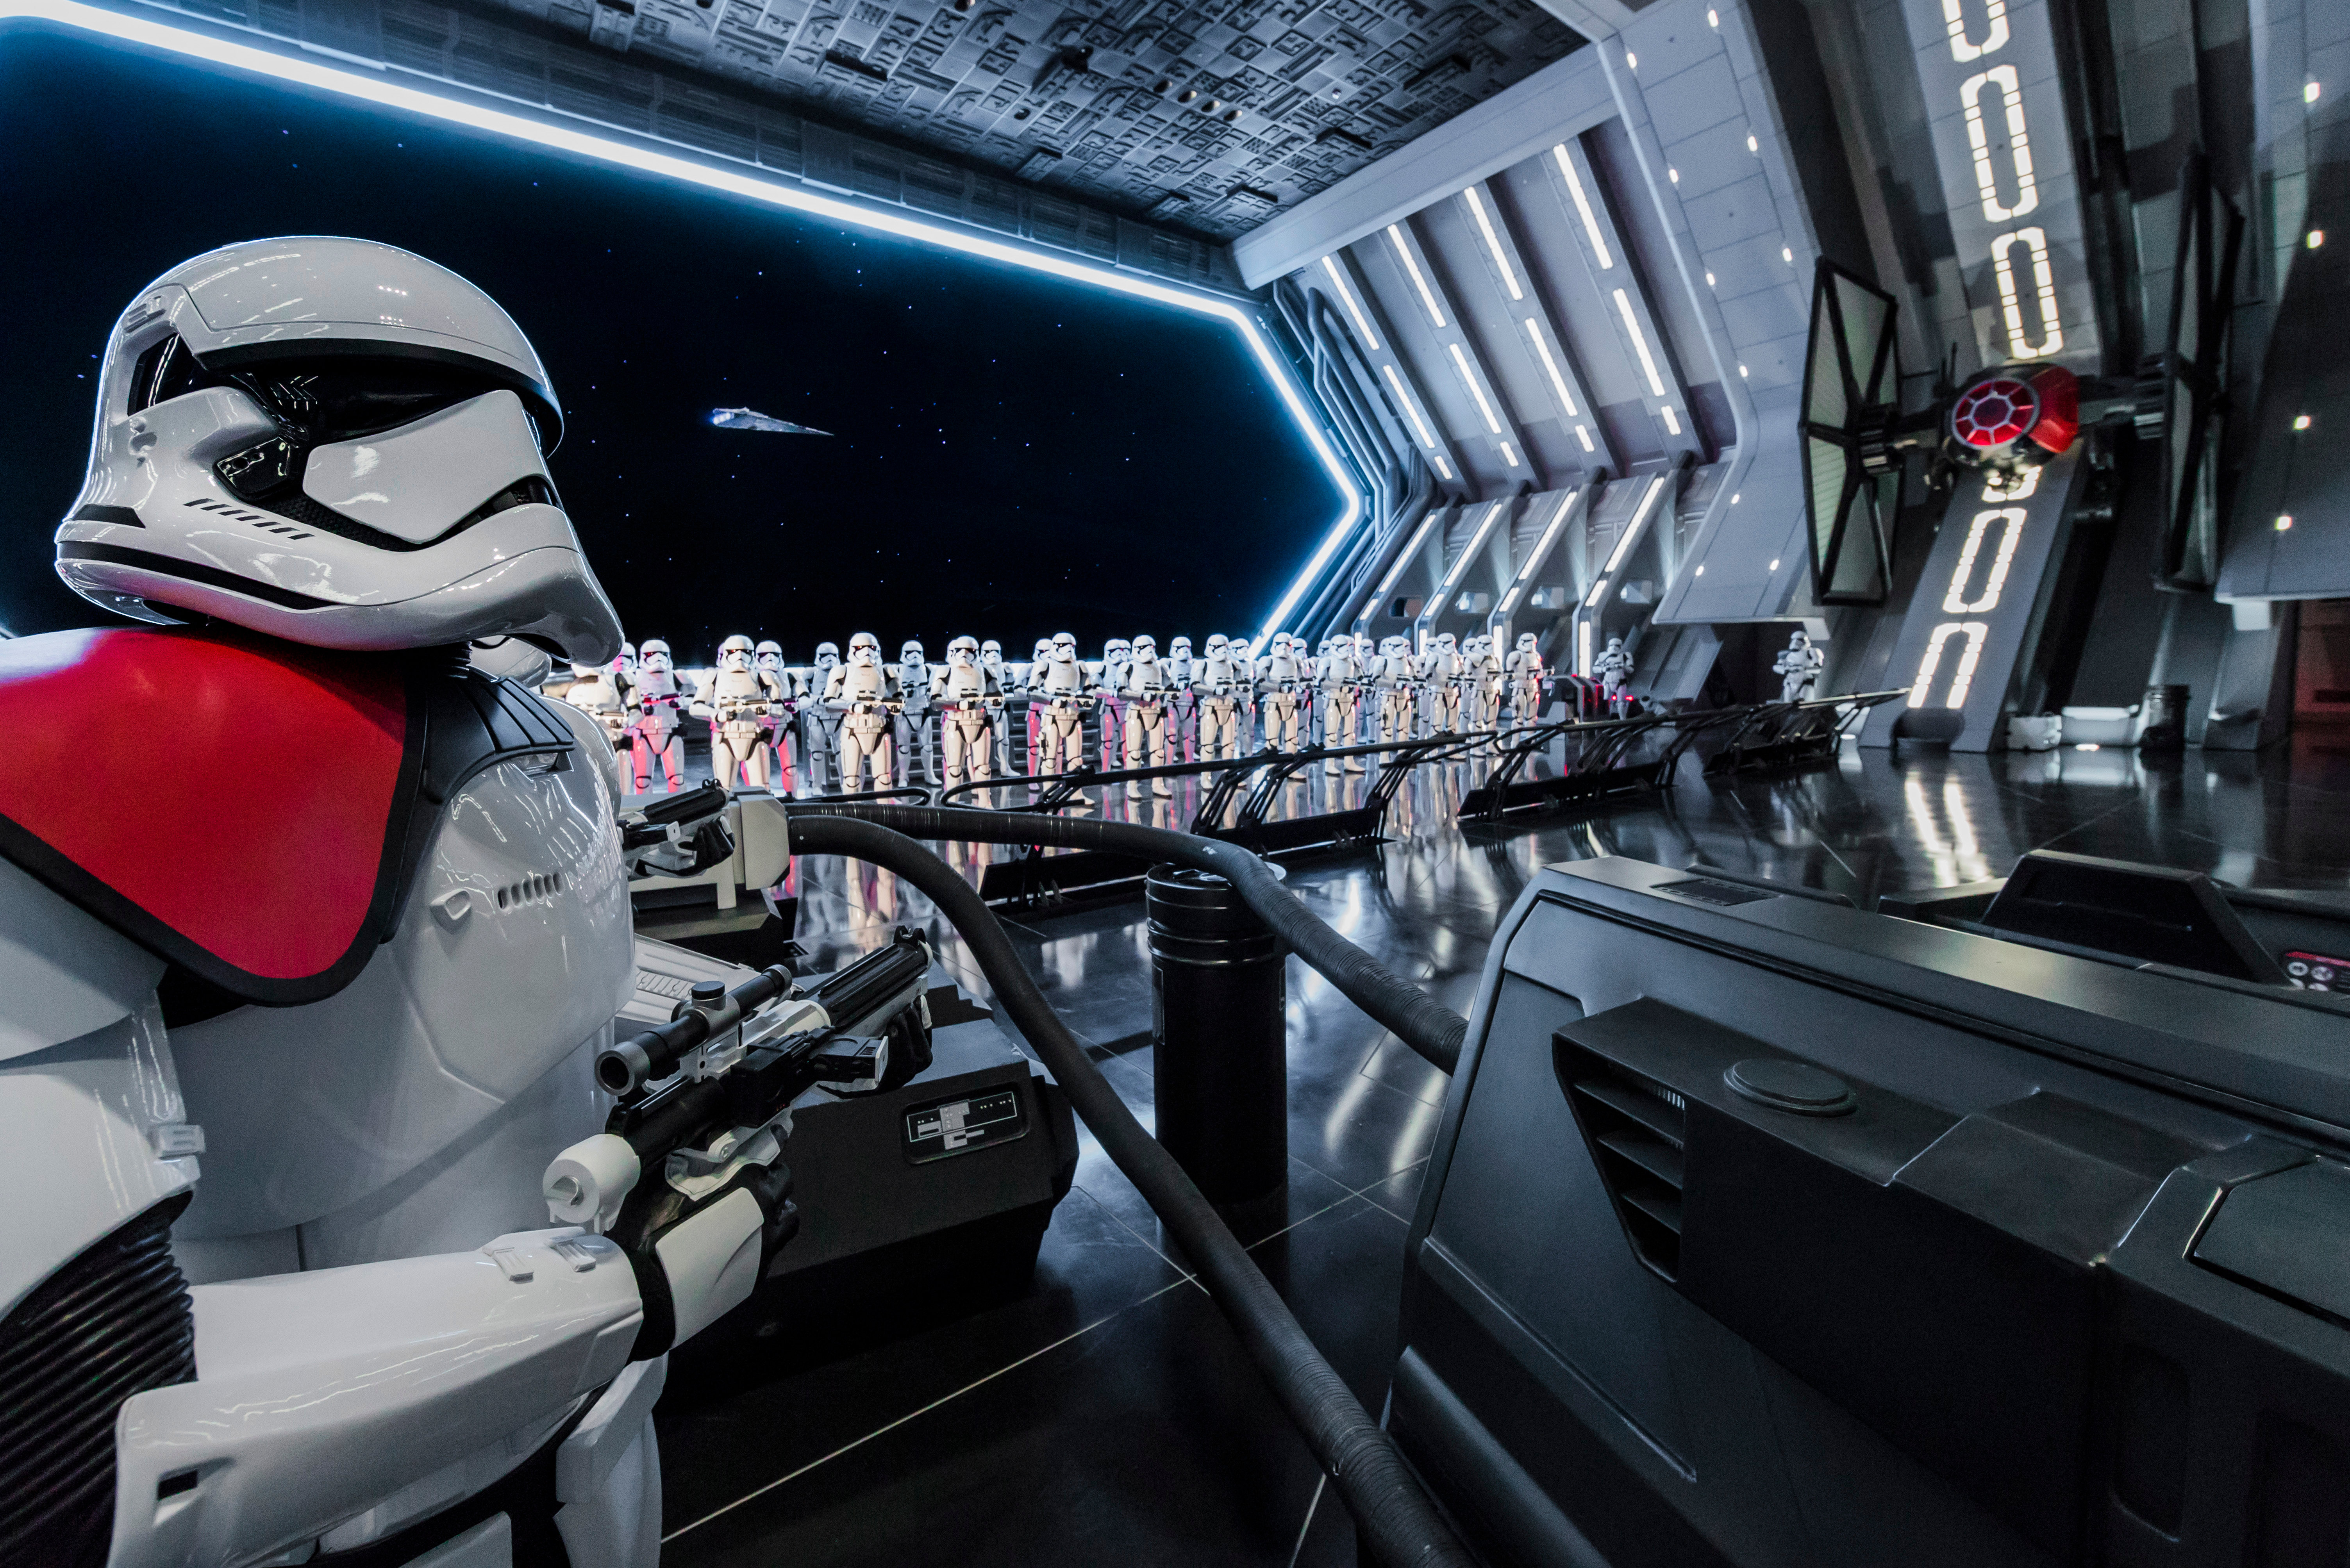 Inside Star Wars Rise of the Resistance hangar